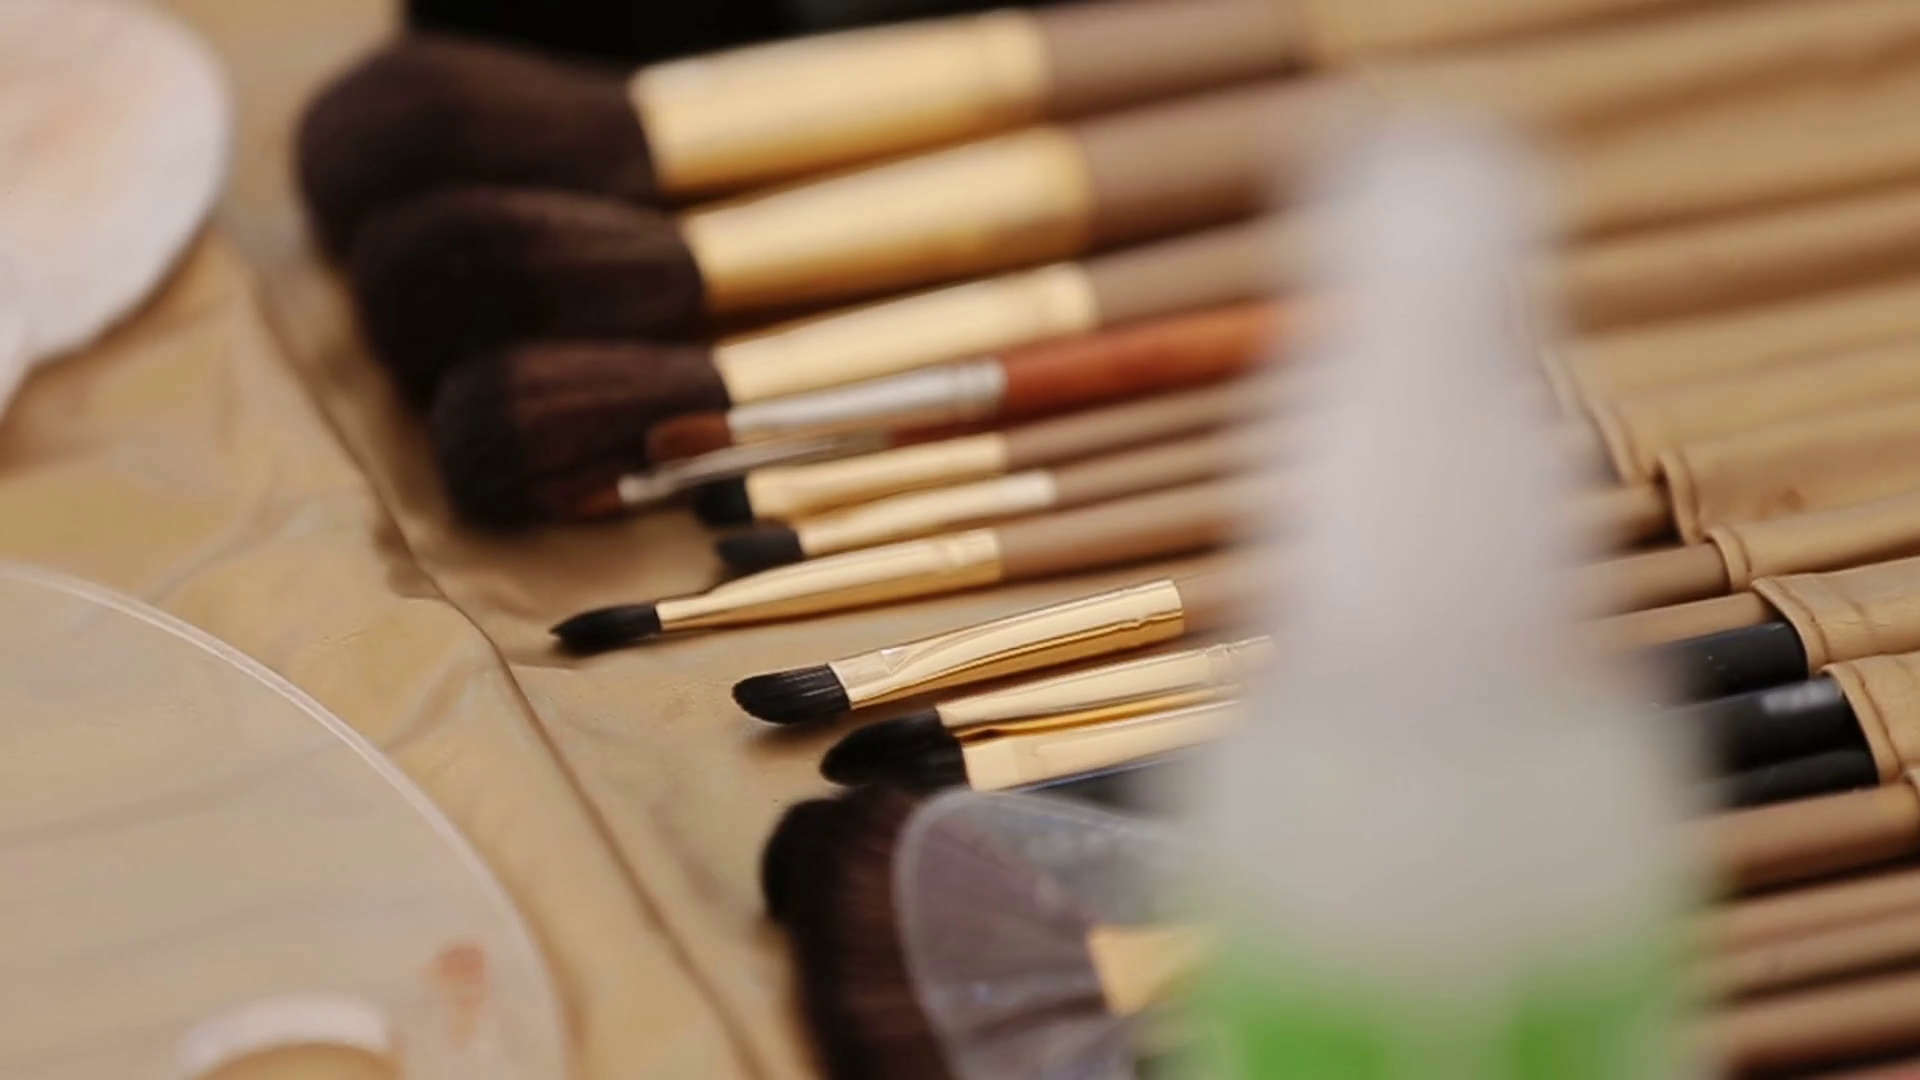 Professional makeup brushes tools make-up products set closeup art ...